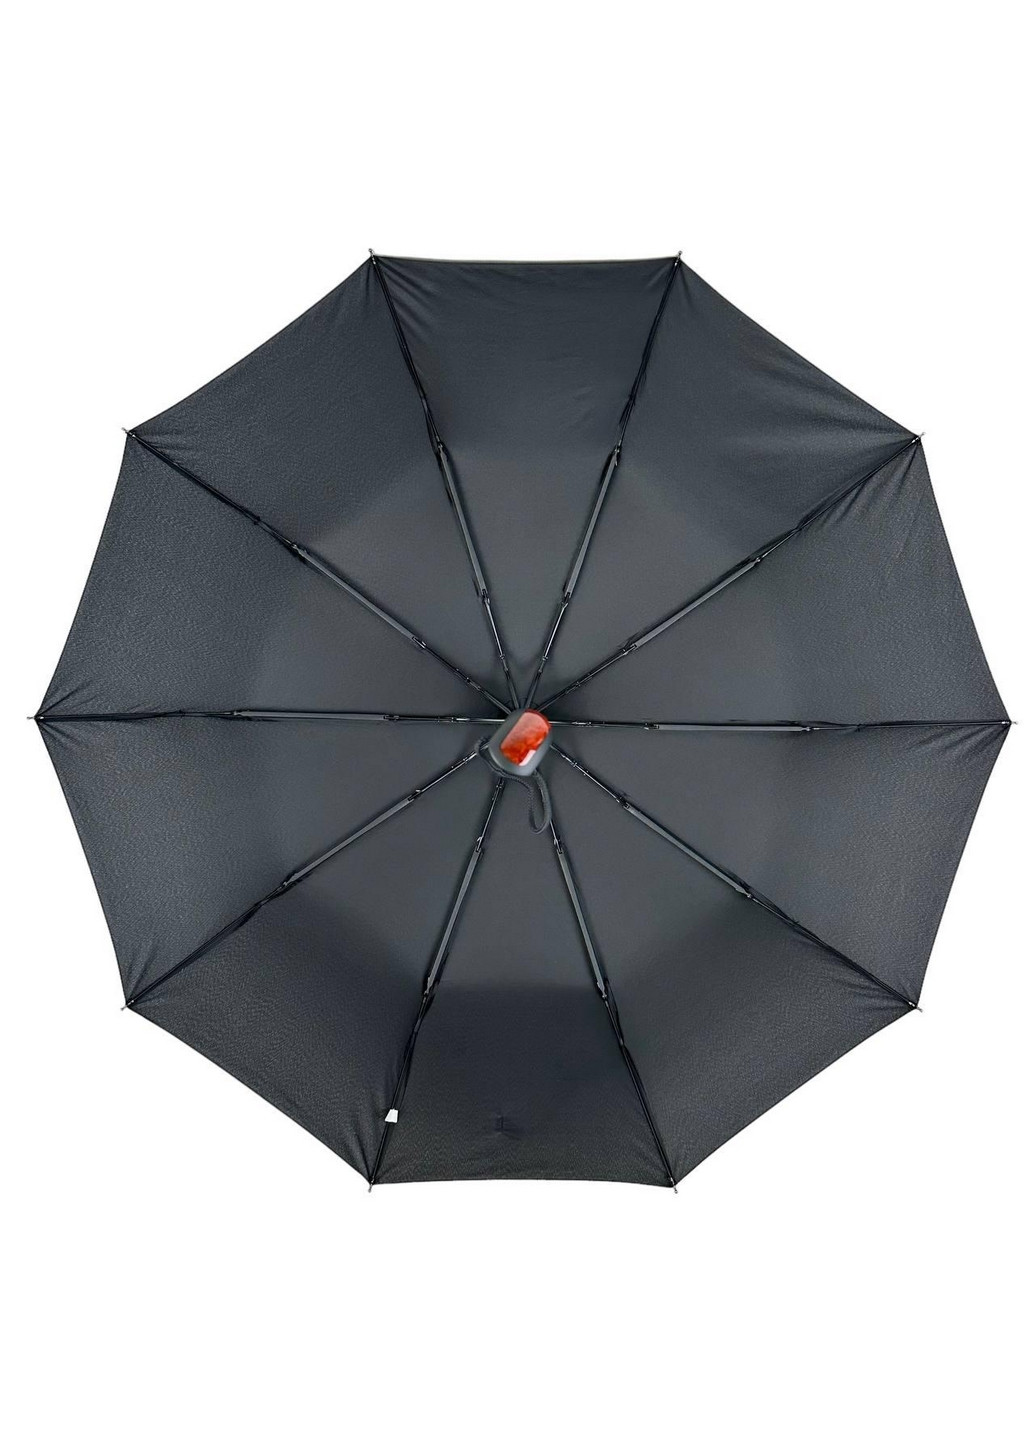 Мужской складной зонт полуавтомат Feeling Rain (276392397)